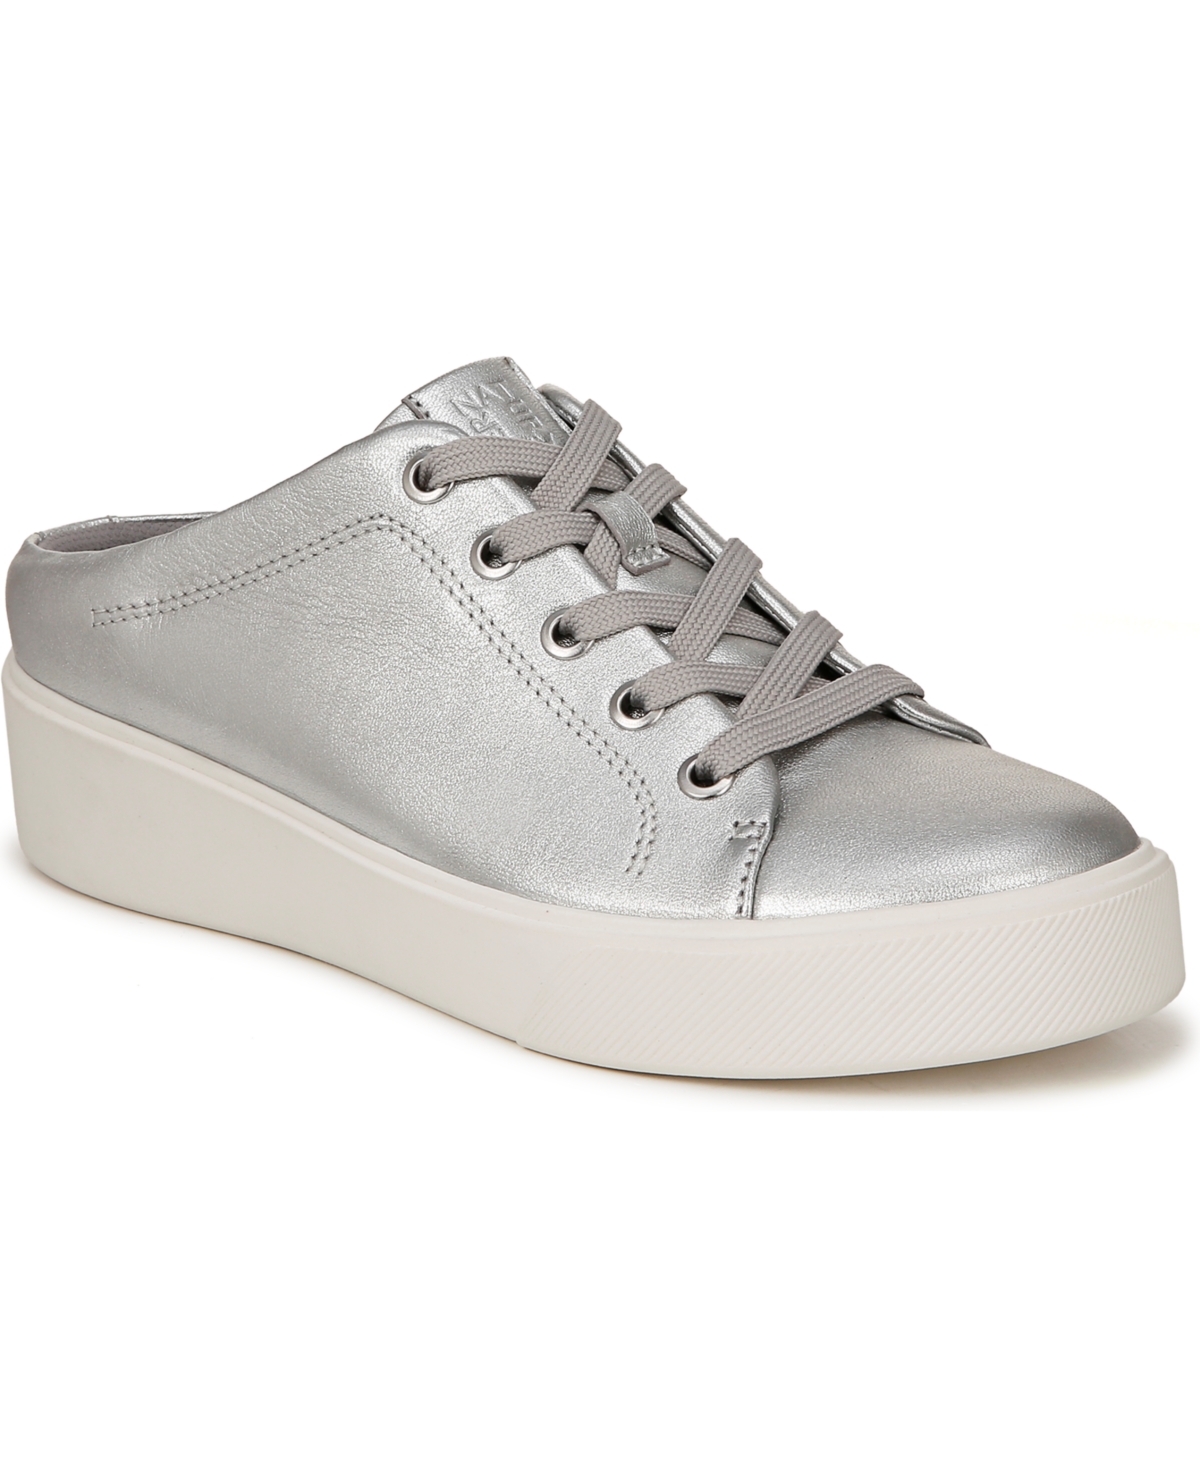 Morrison-Mule Sneakers - Silver Leather